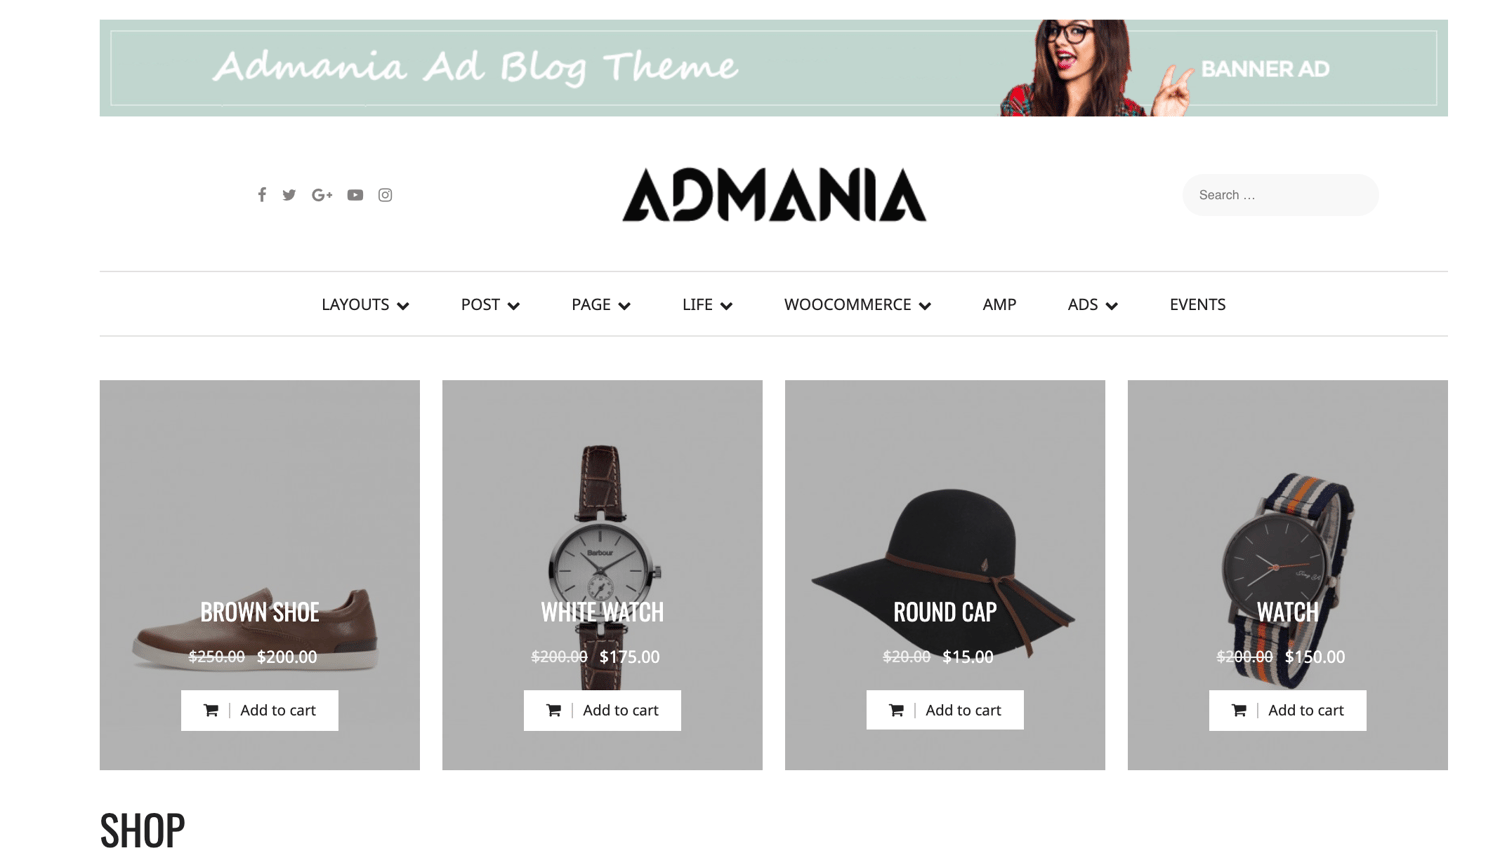 WooCommerce store in Admania theme increase ads revenue